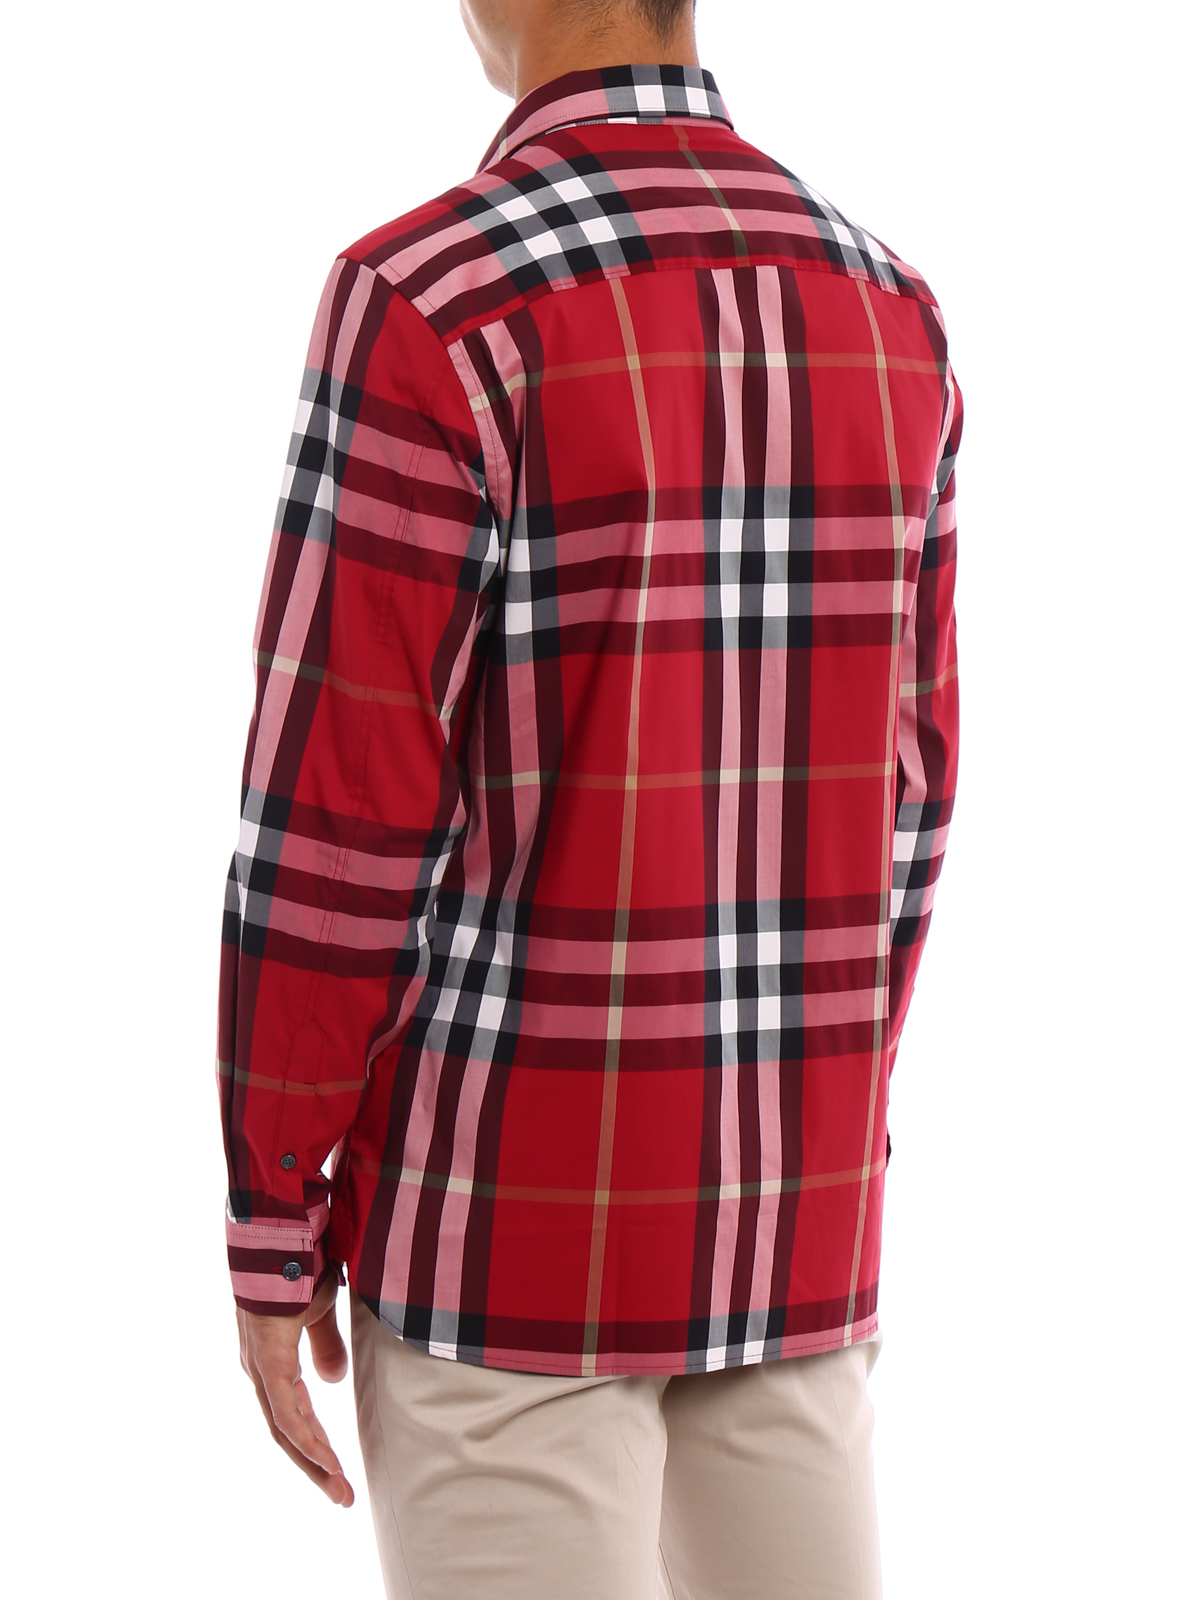 Shirts Burberry - Nelson check cotton blend shirt - 4554711 